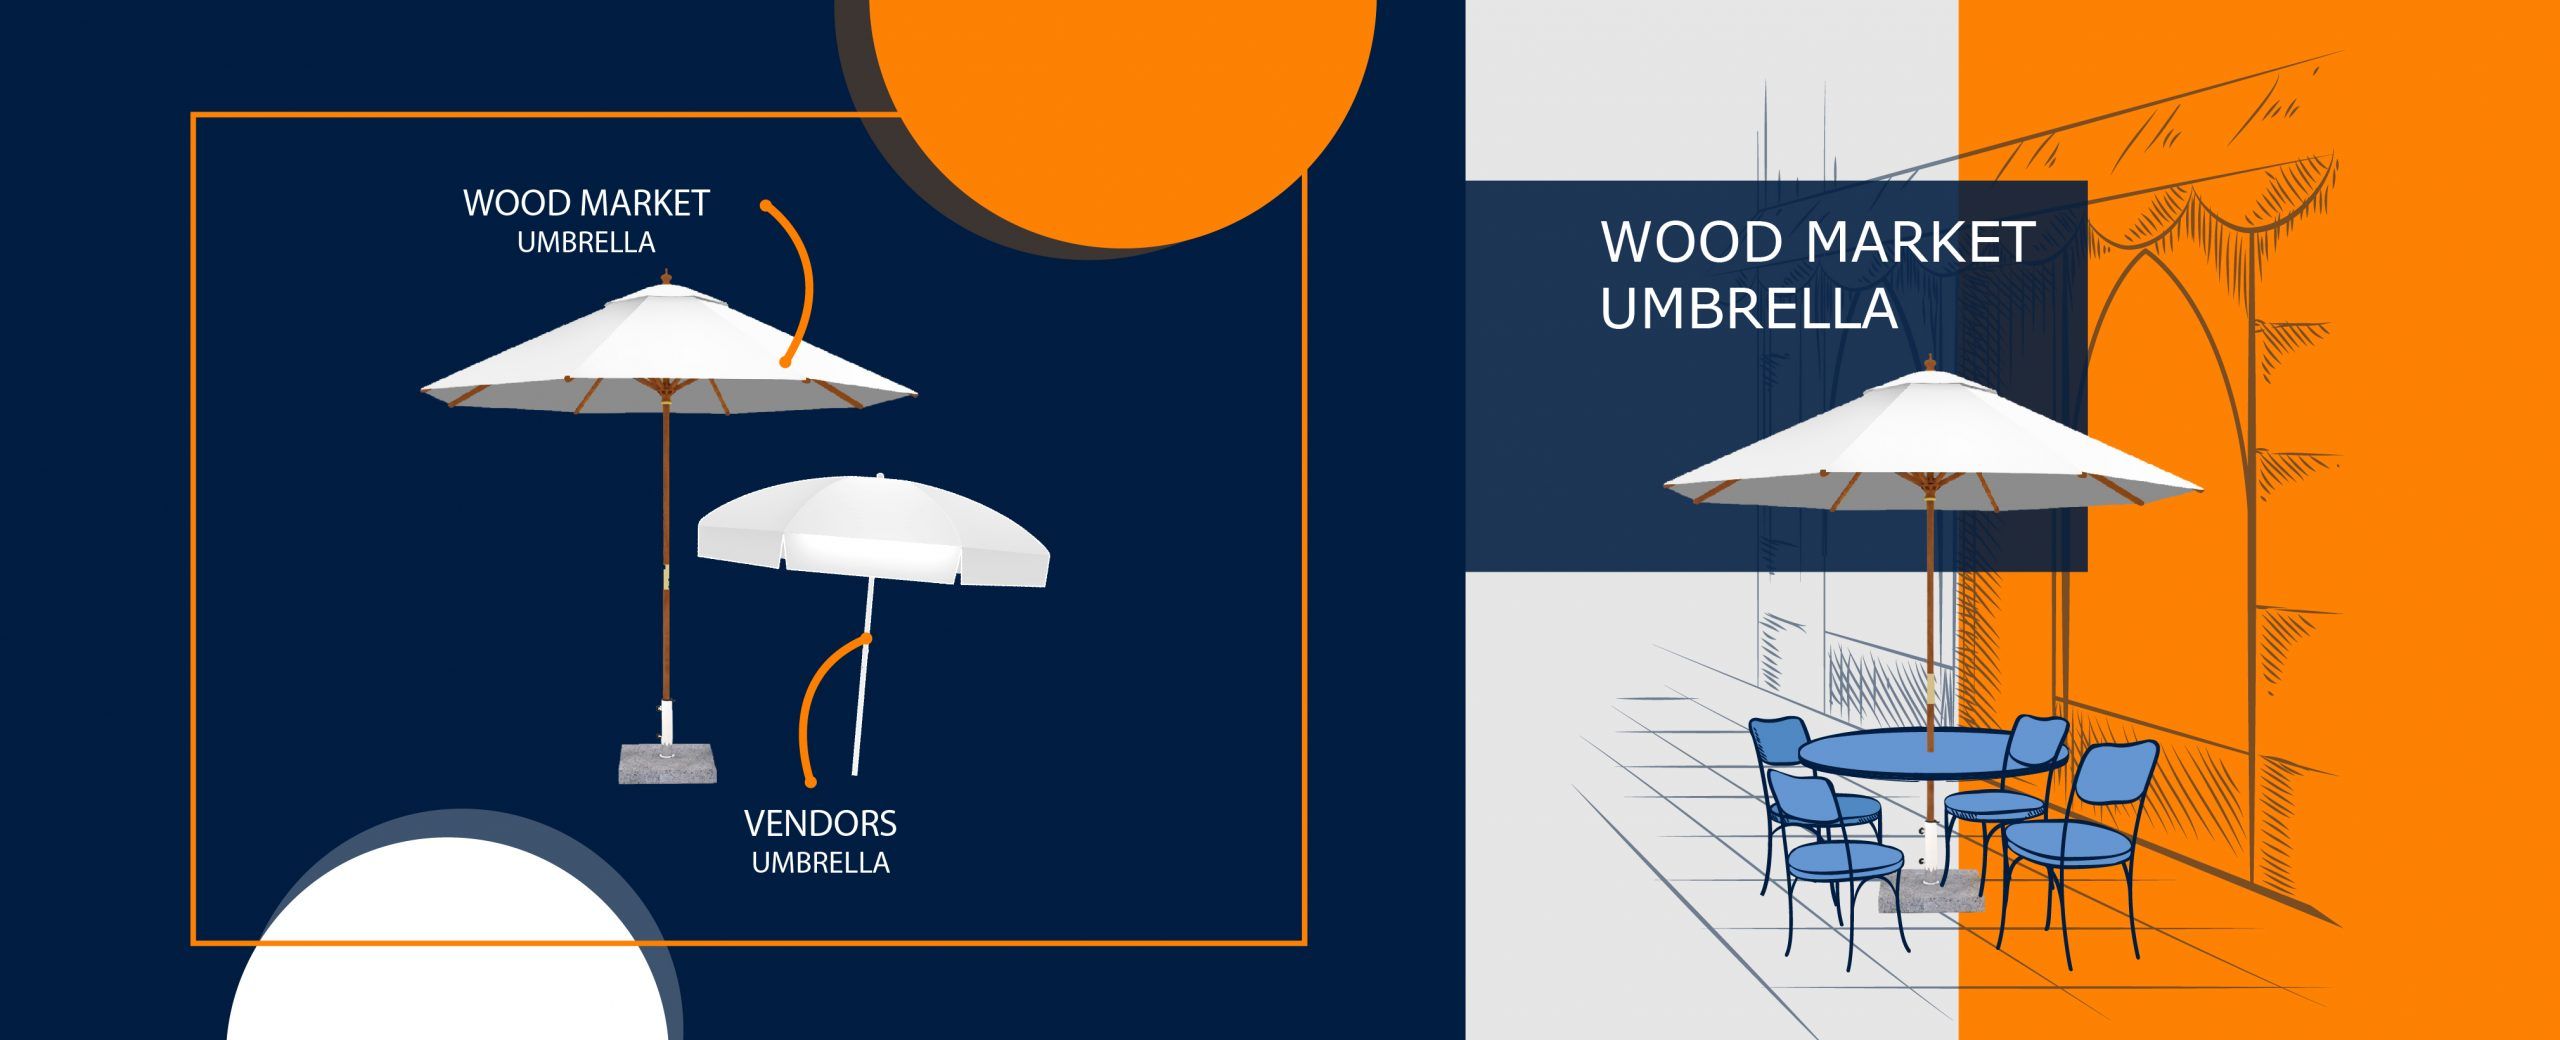 01 Wood Market umbrella SLIDER PAG WEB 01 1 scaled